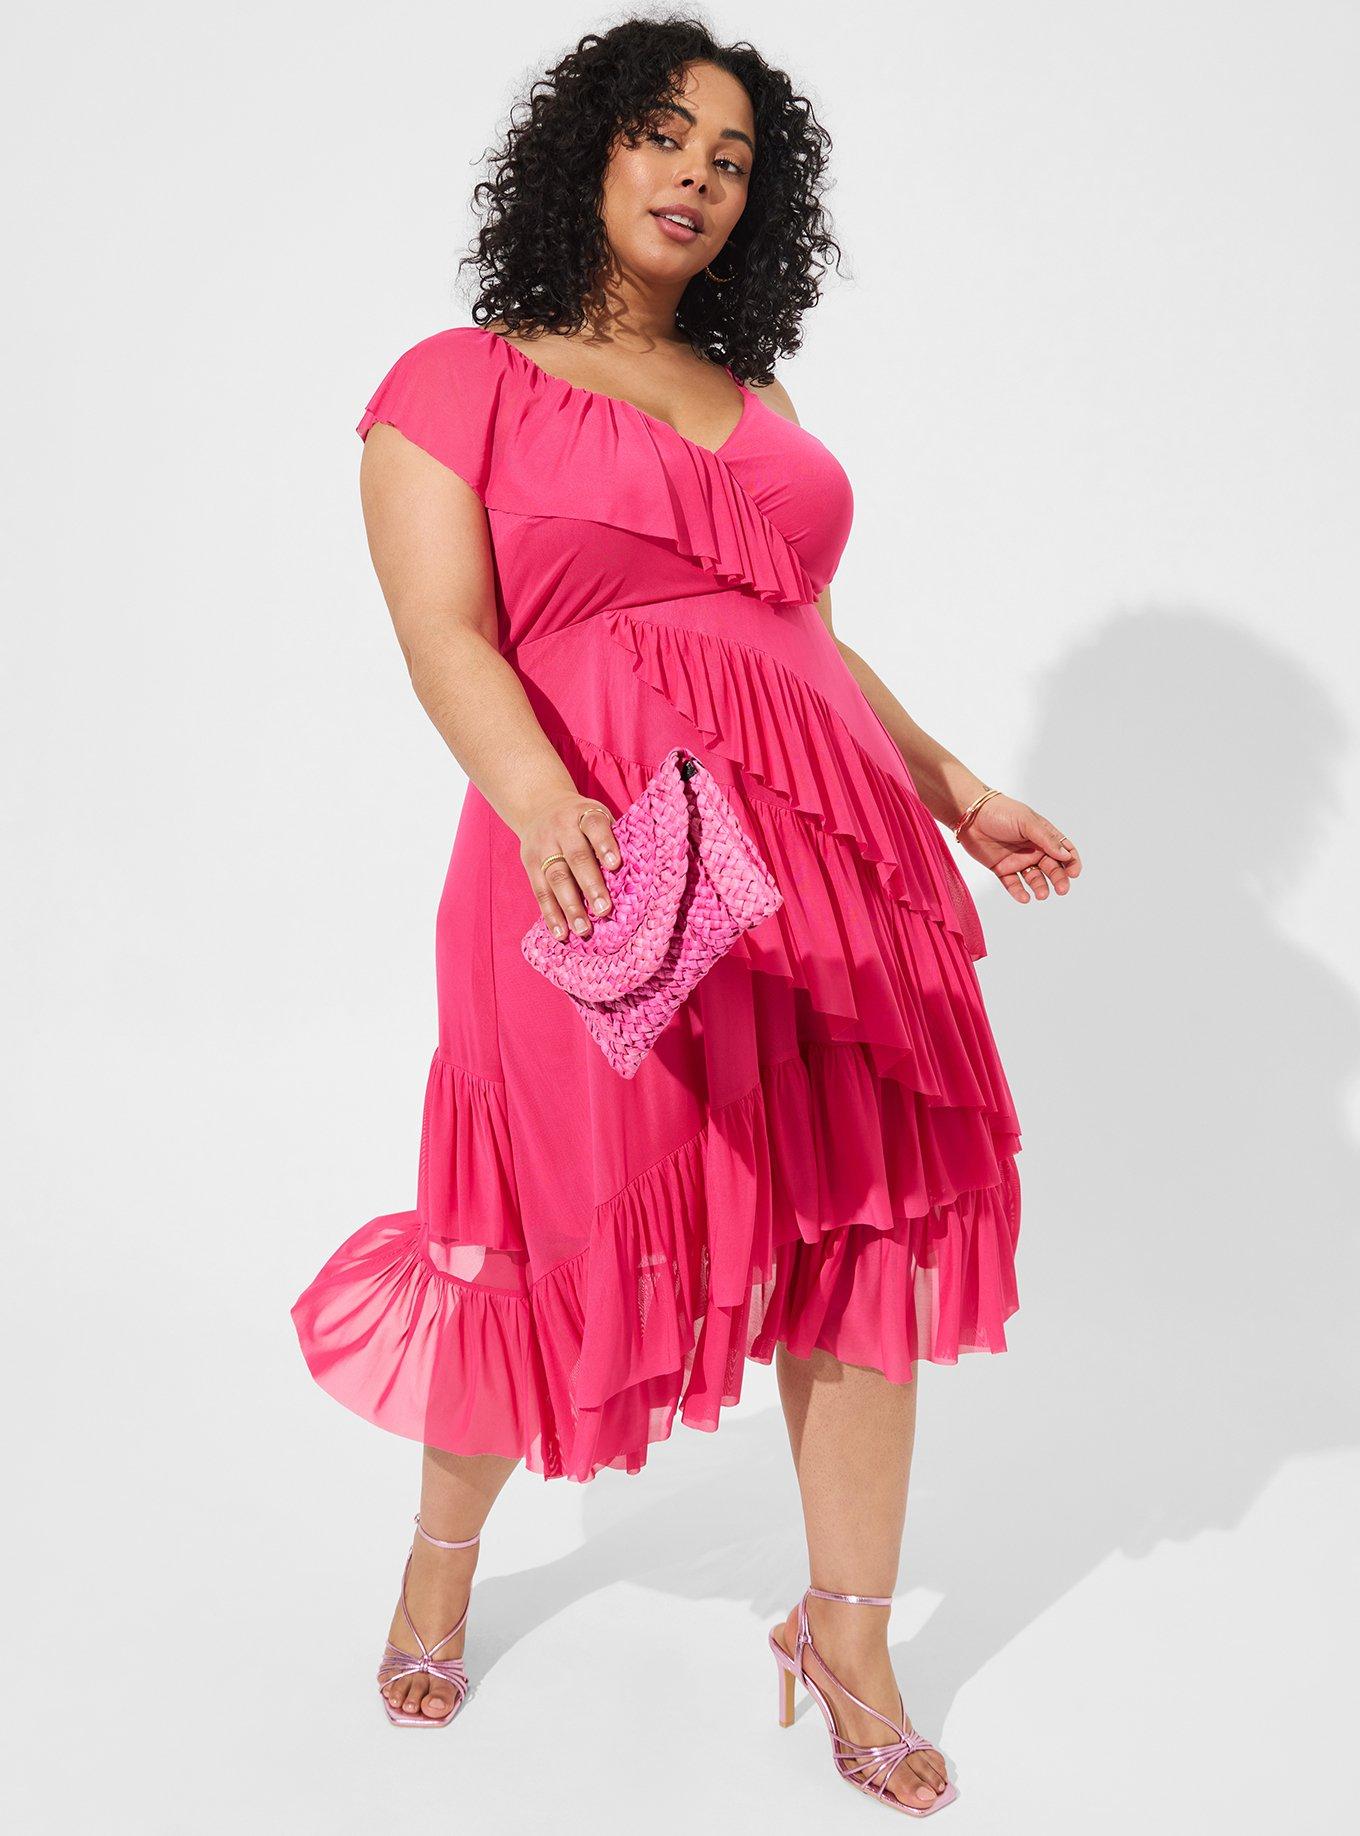 Torrid Honeysuckle Pink High Low Surplice Midi Dress Plus Size 2X, 18/20